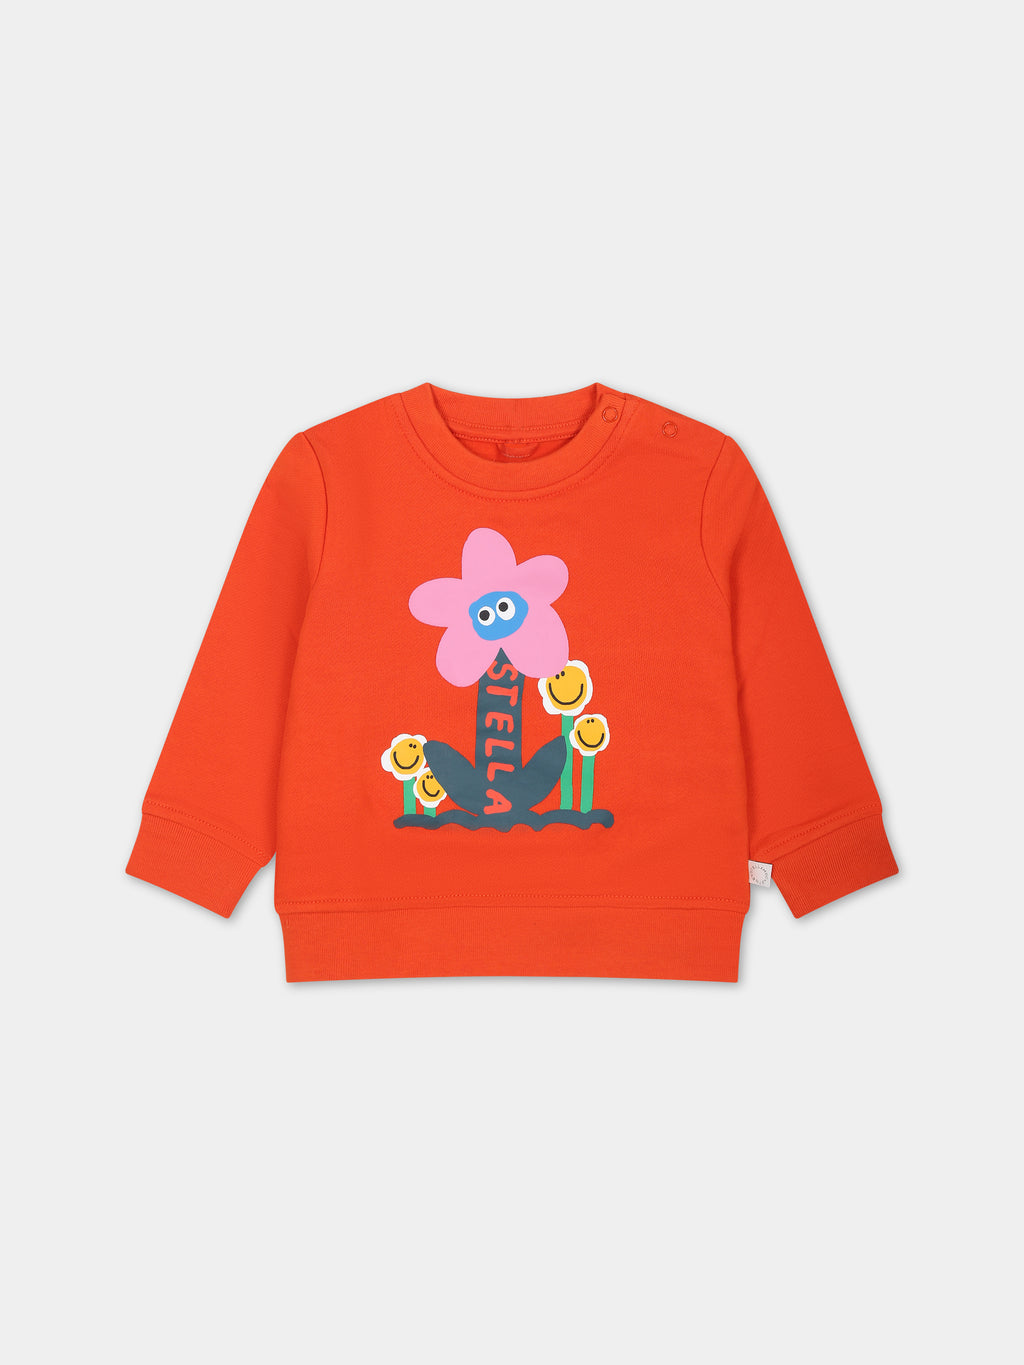 Orange sweatshirt for baby girl with flowesr and logo